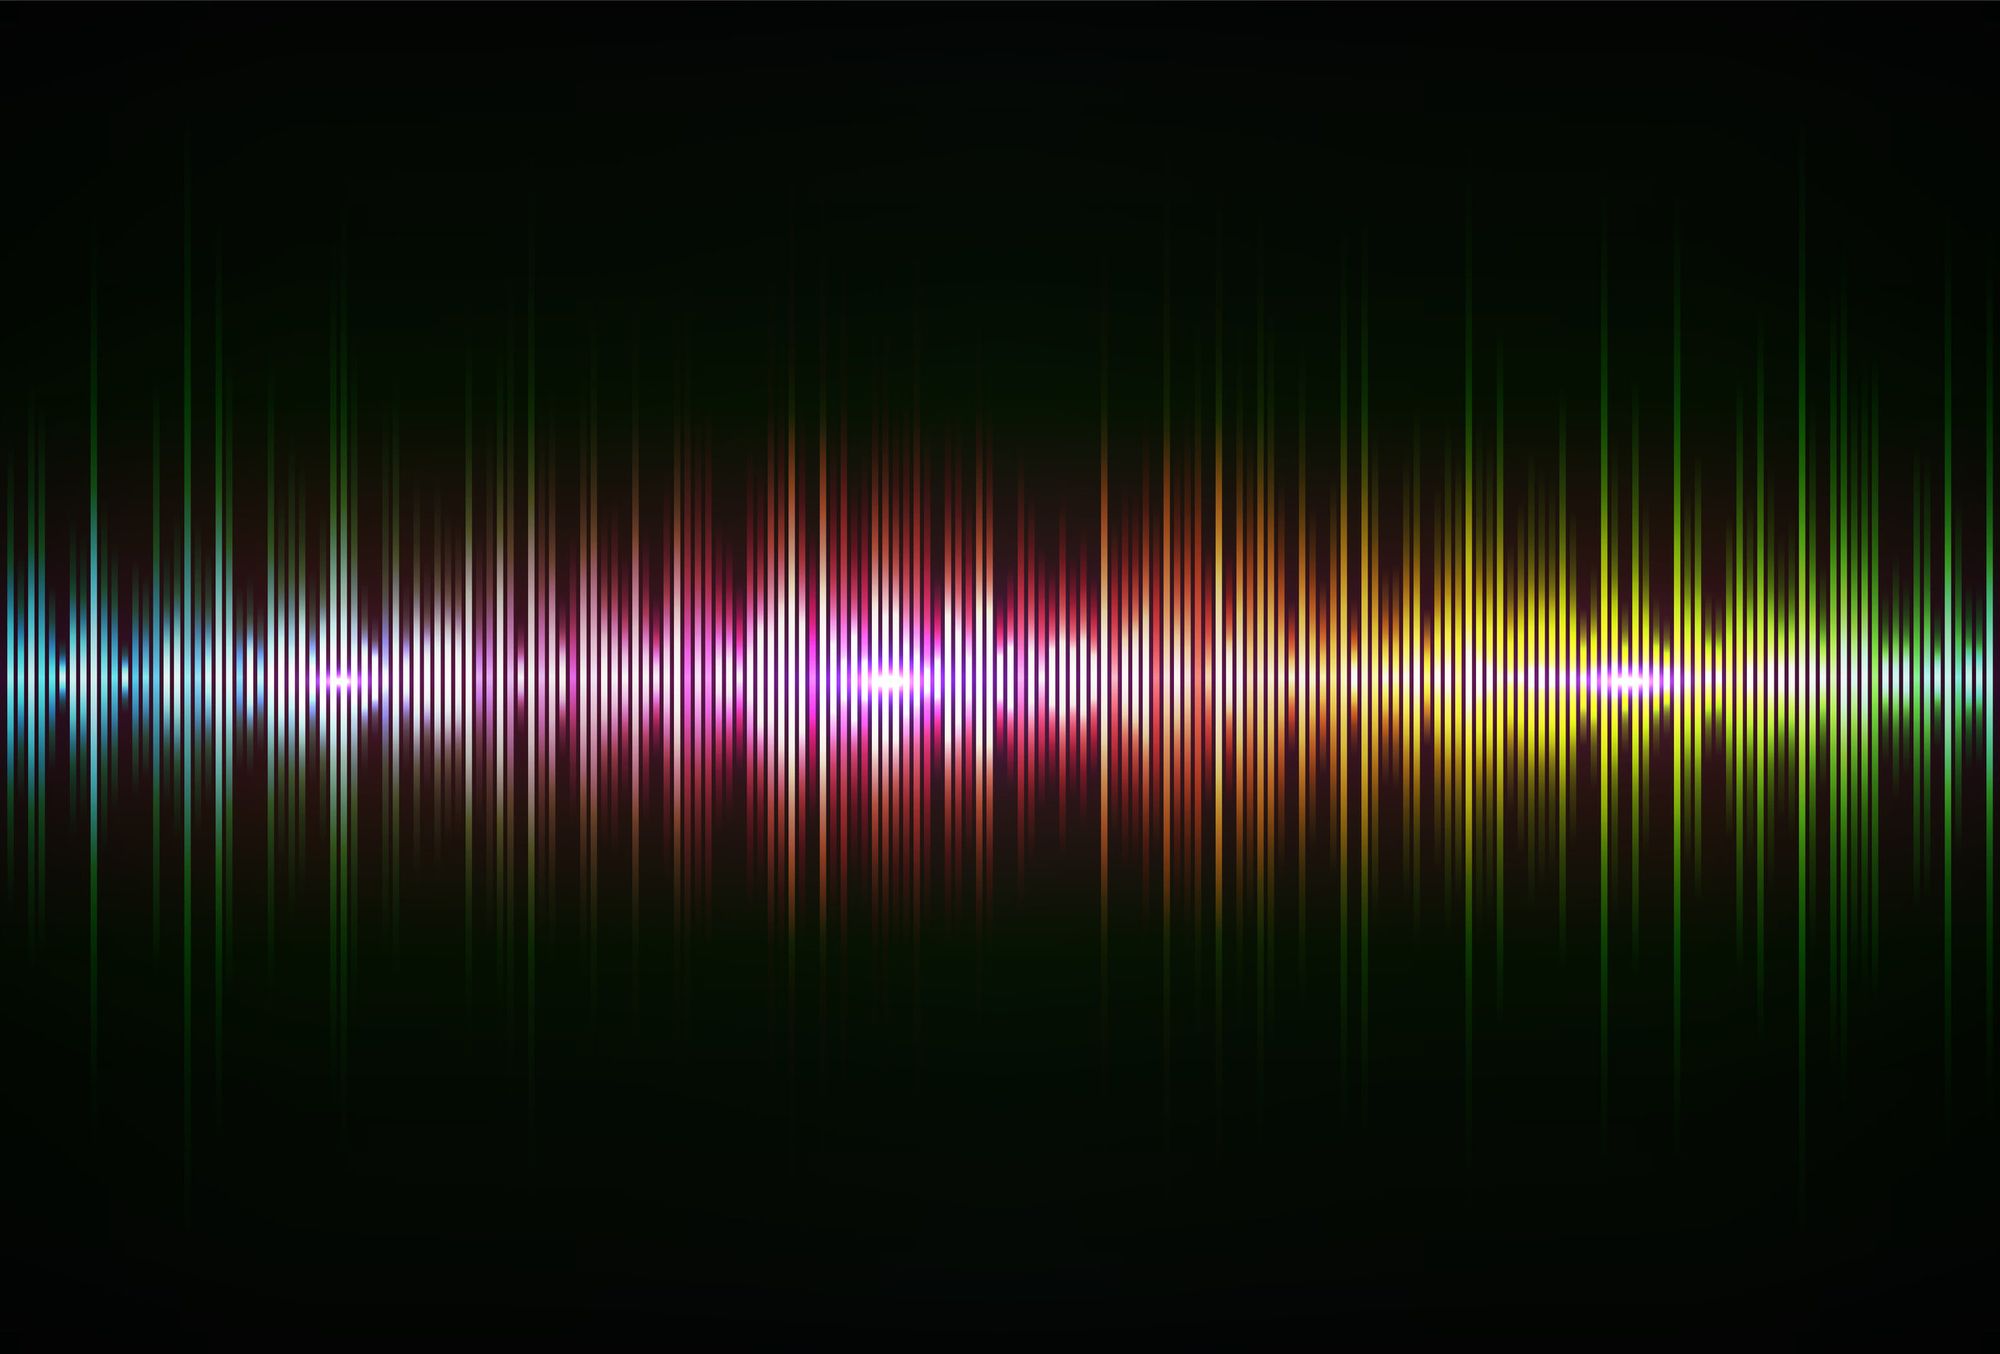 A rainbow of colours across a sound wave spectrum